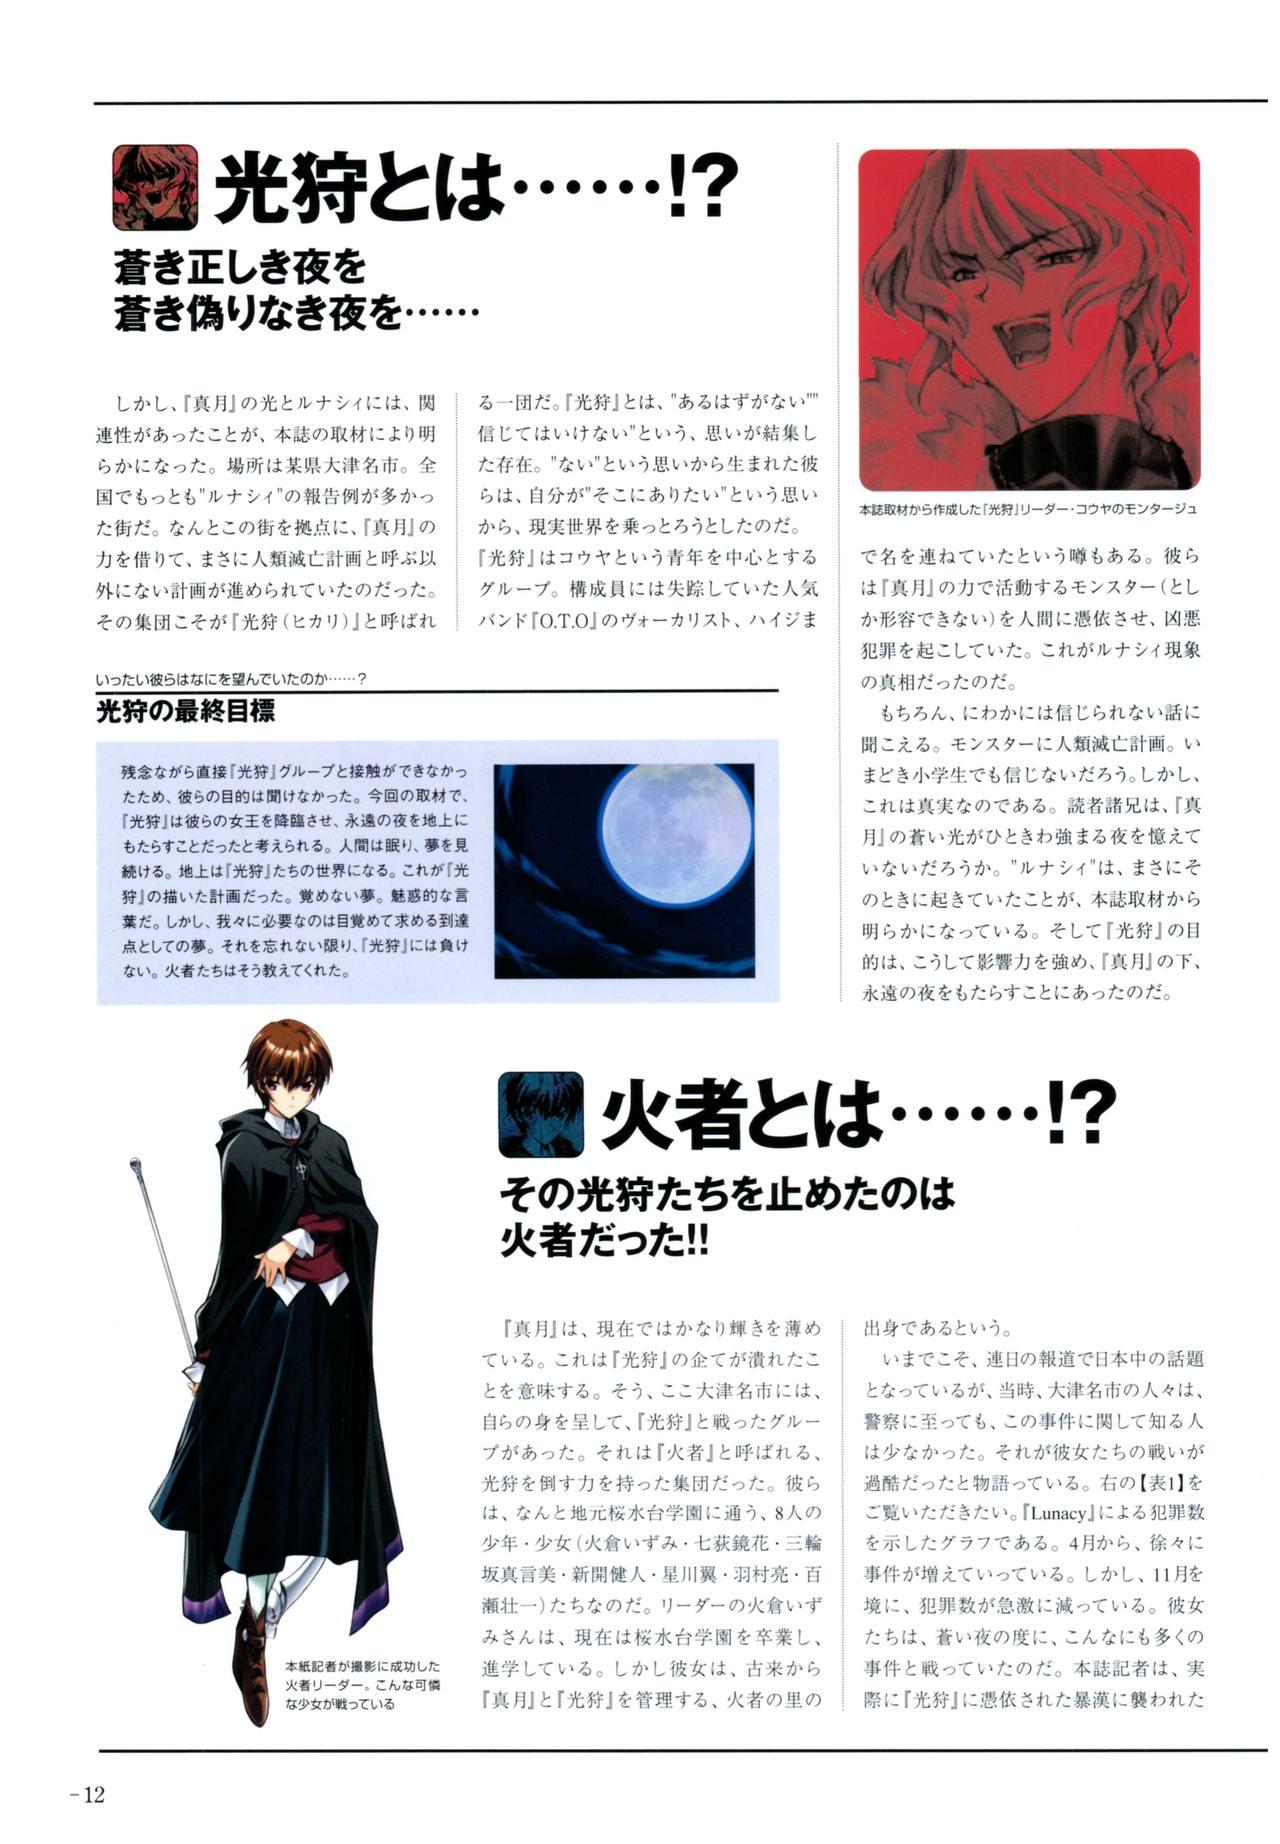 Yoru Ga Kuru! Square Of The Moon Visual Fan Book 9